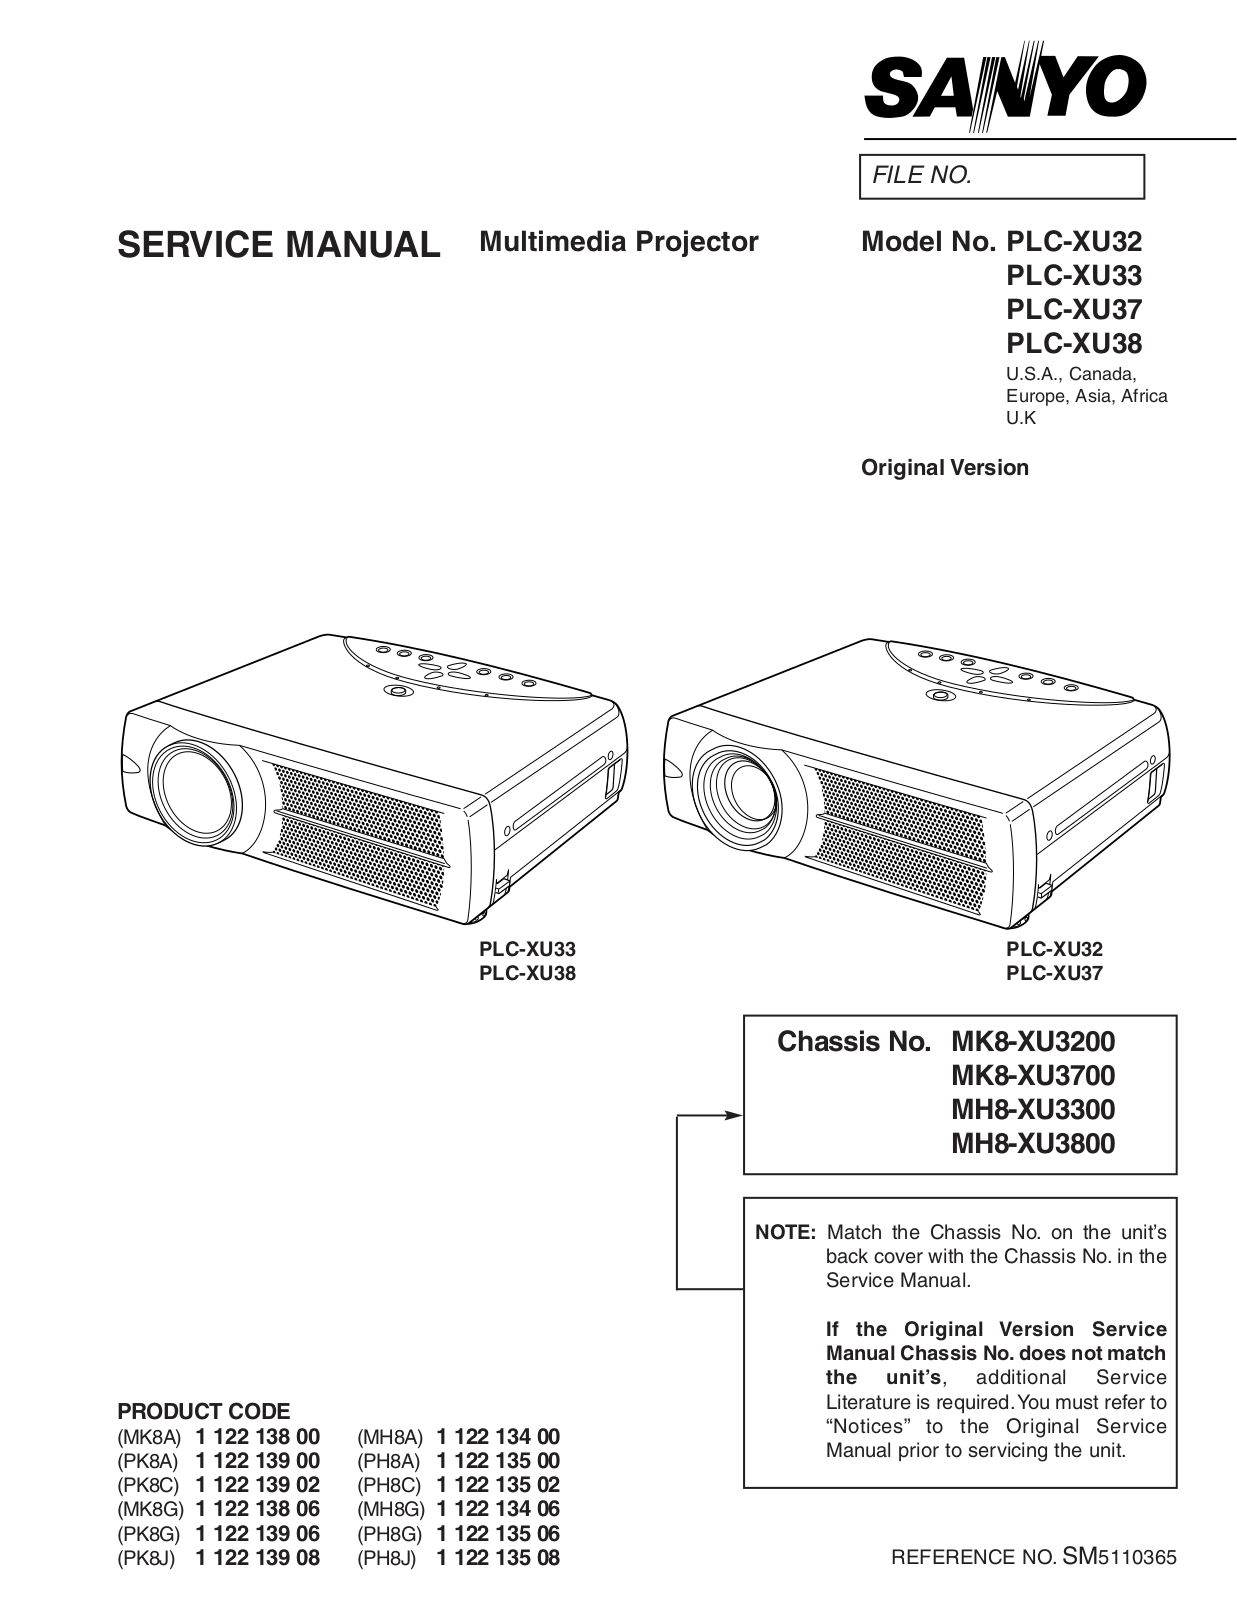 SANYO PLC-XU32-33-37-38 Service Manual